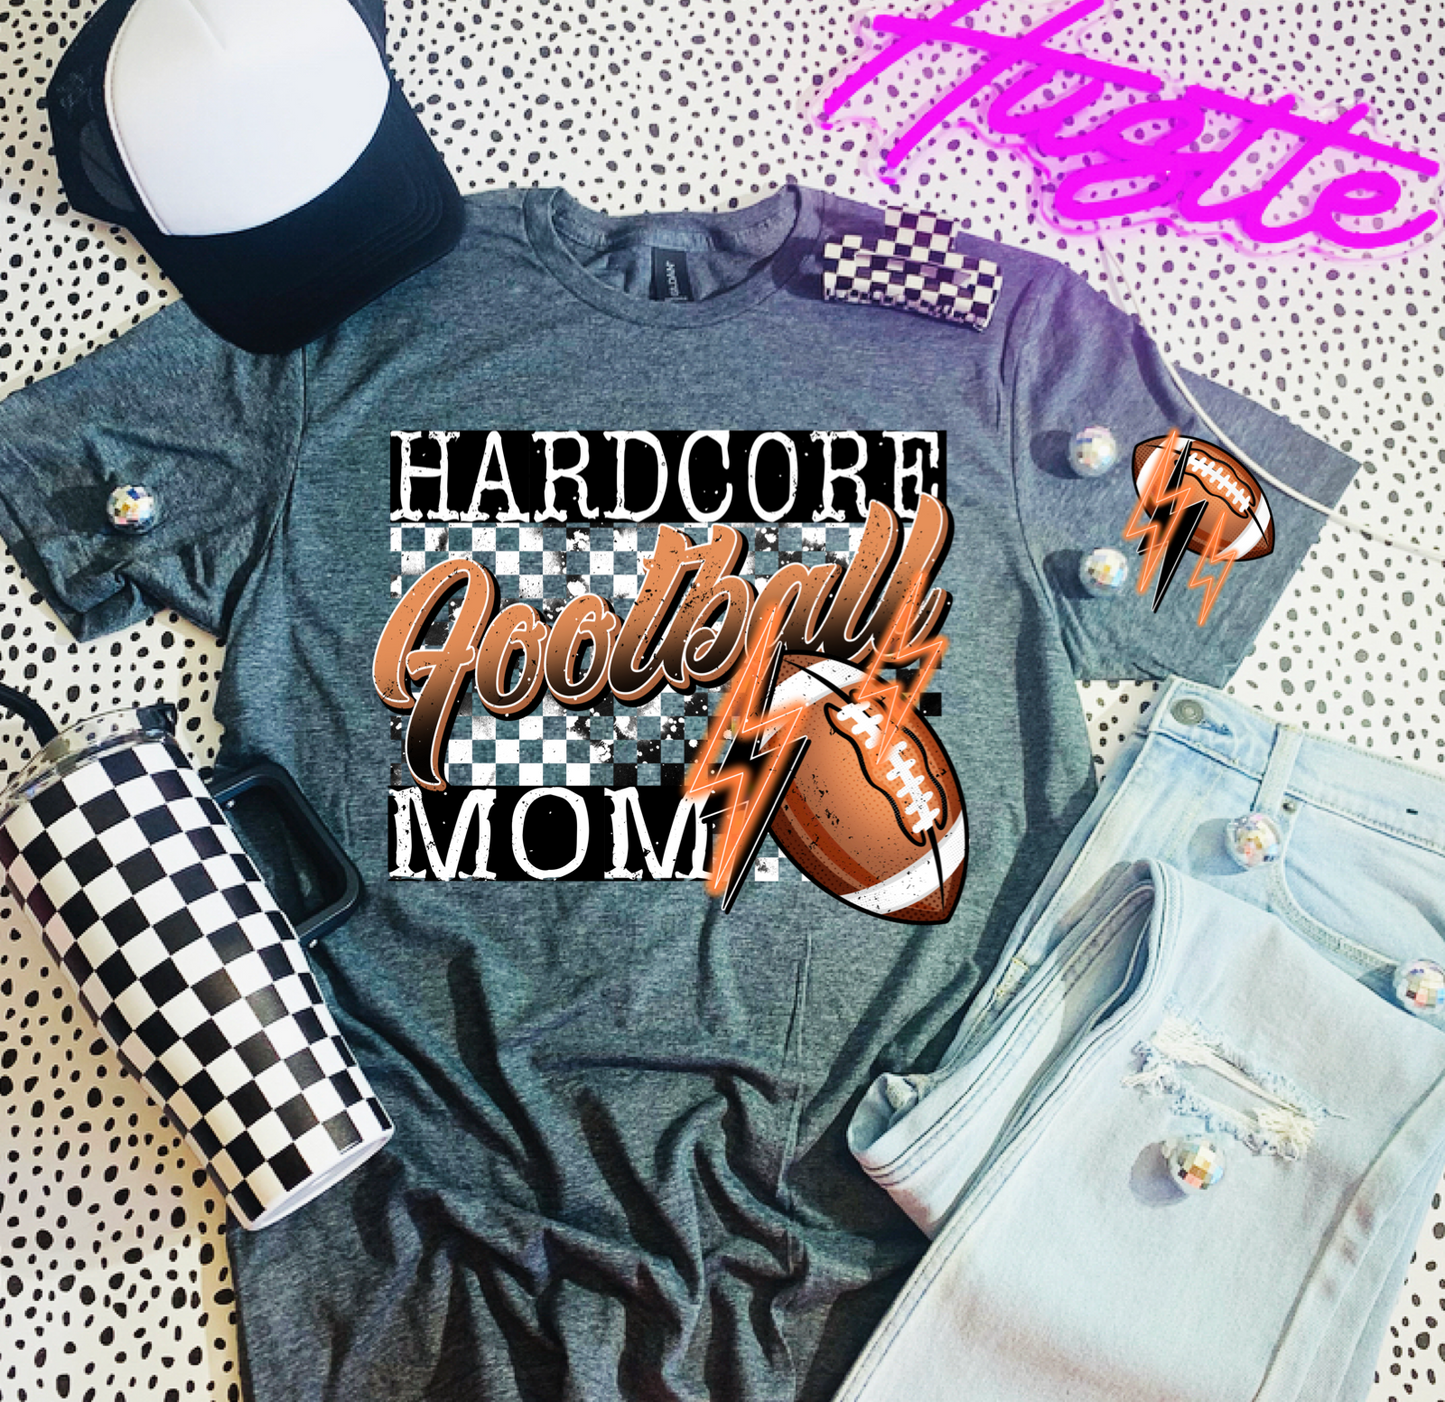 Hardcore football mom